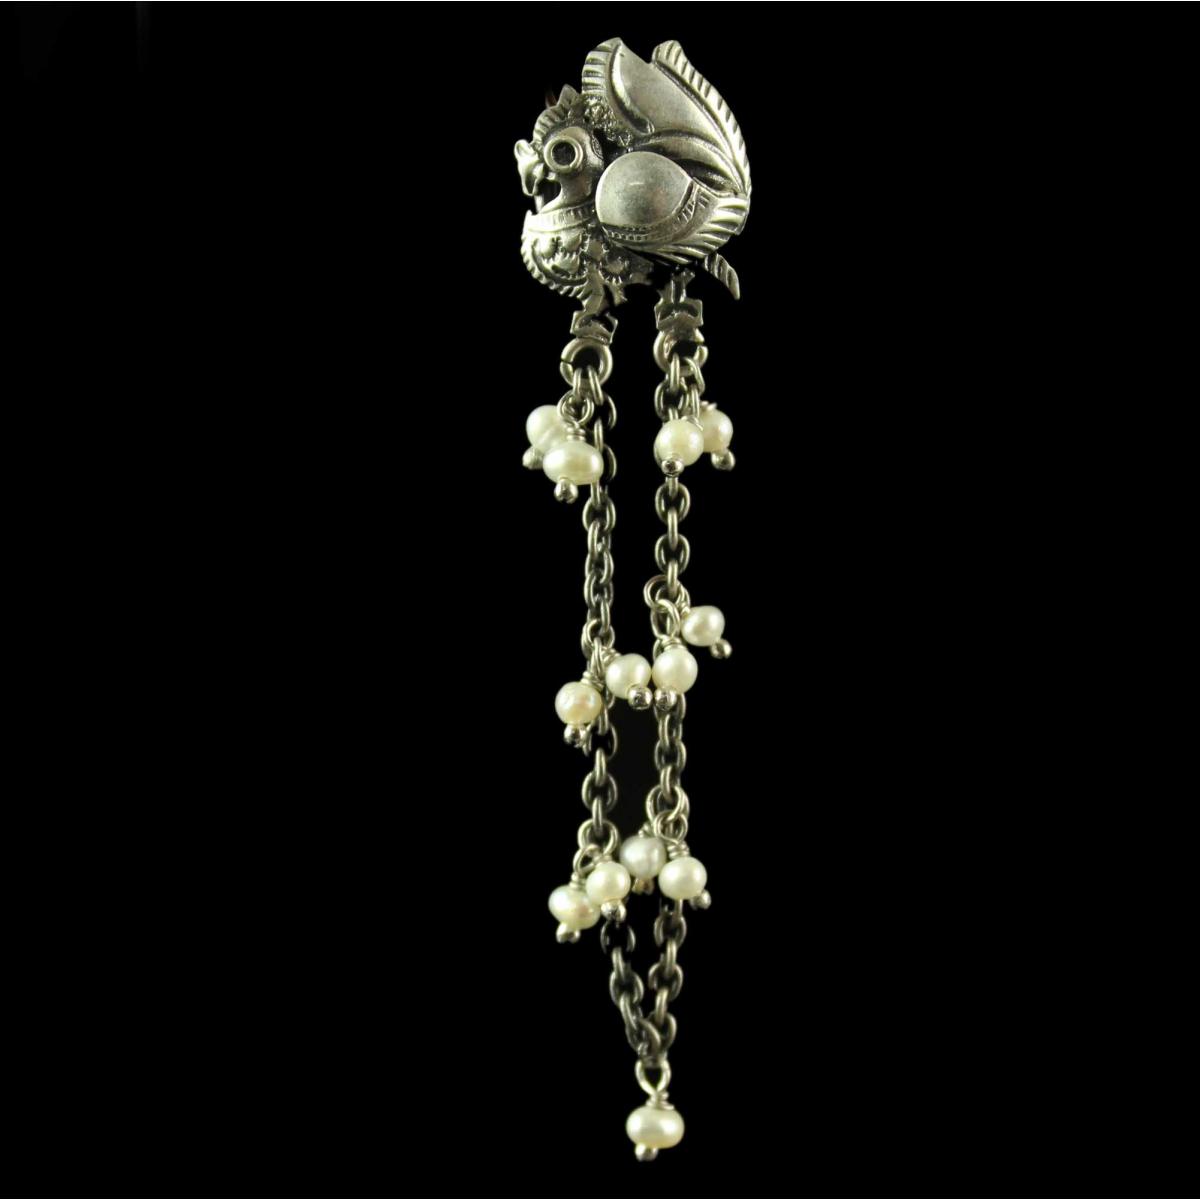 Contemporary Baroque Pearl & Peridot Drop Earrings in 22ct Rose Gold Plated Silver Jewellery Earrings Stud Earrings 